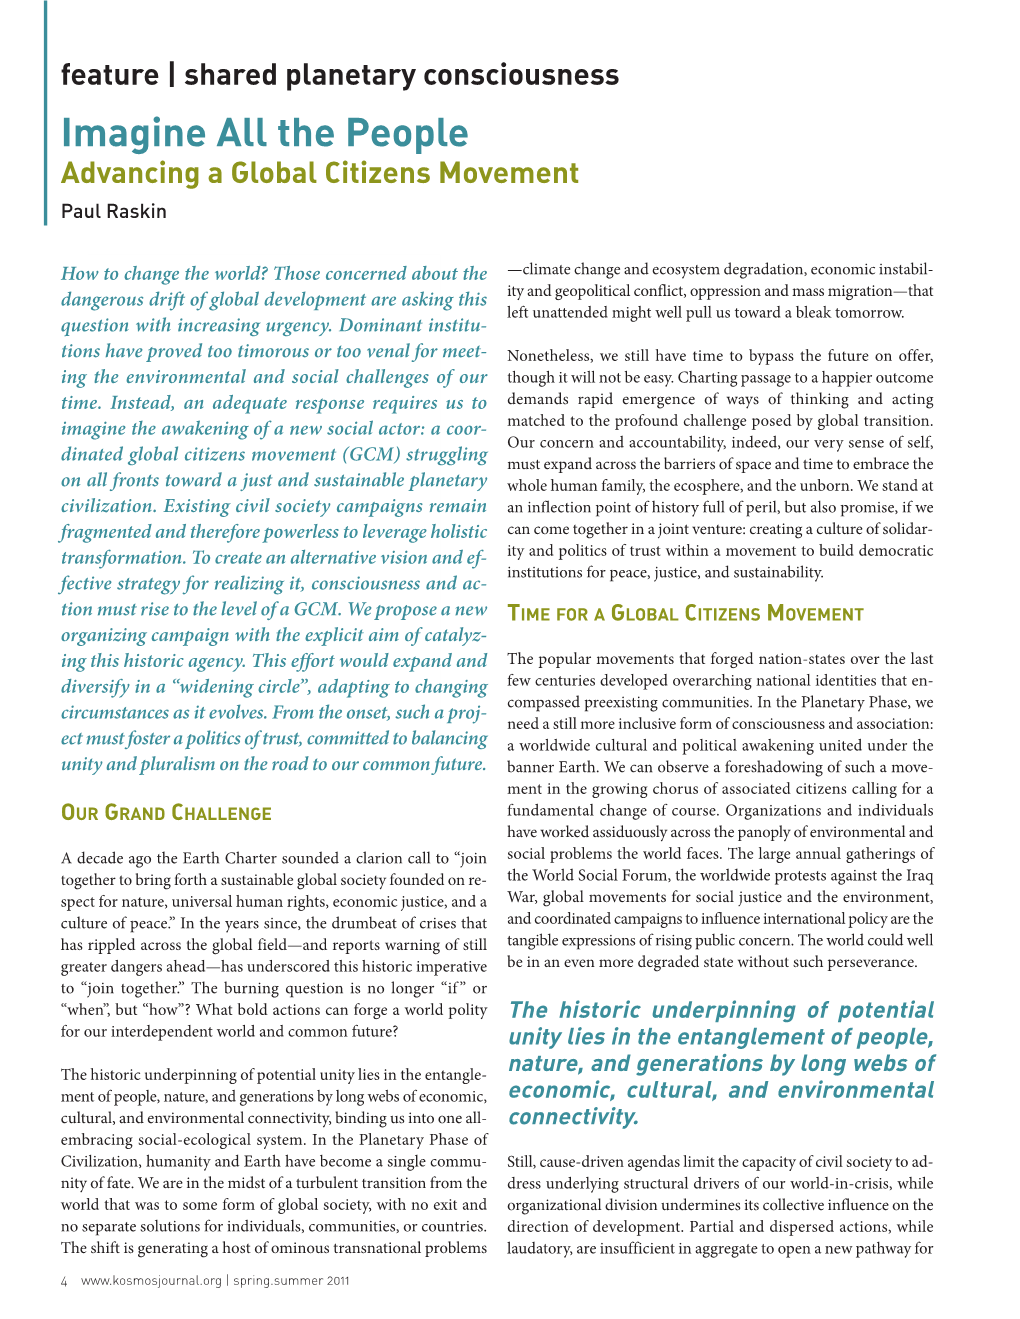 Global Citizens Movement Paul Raskin